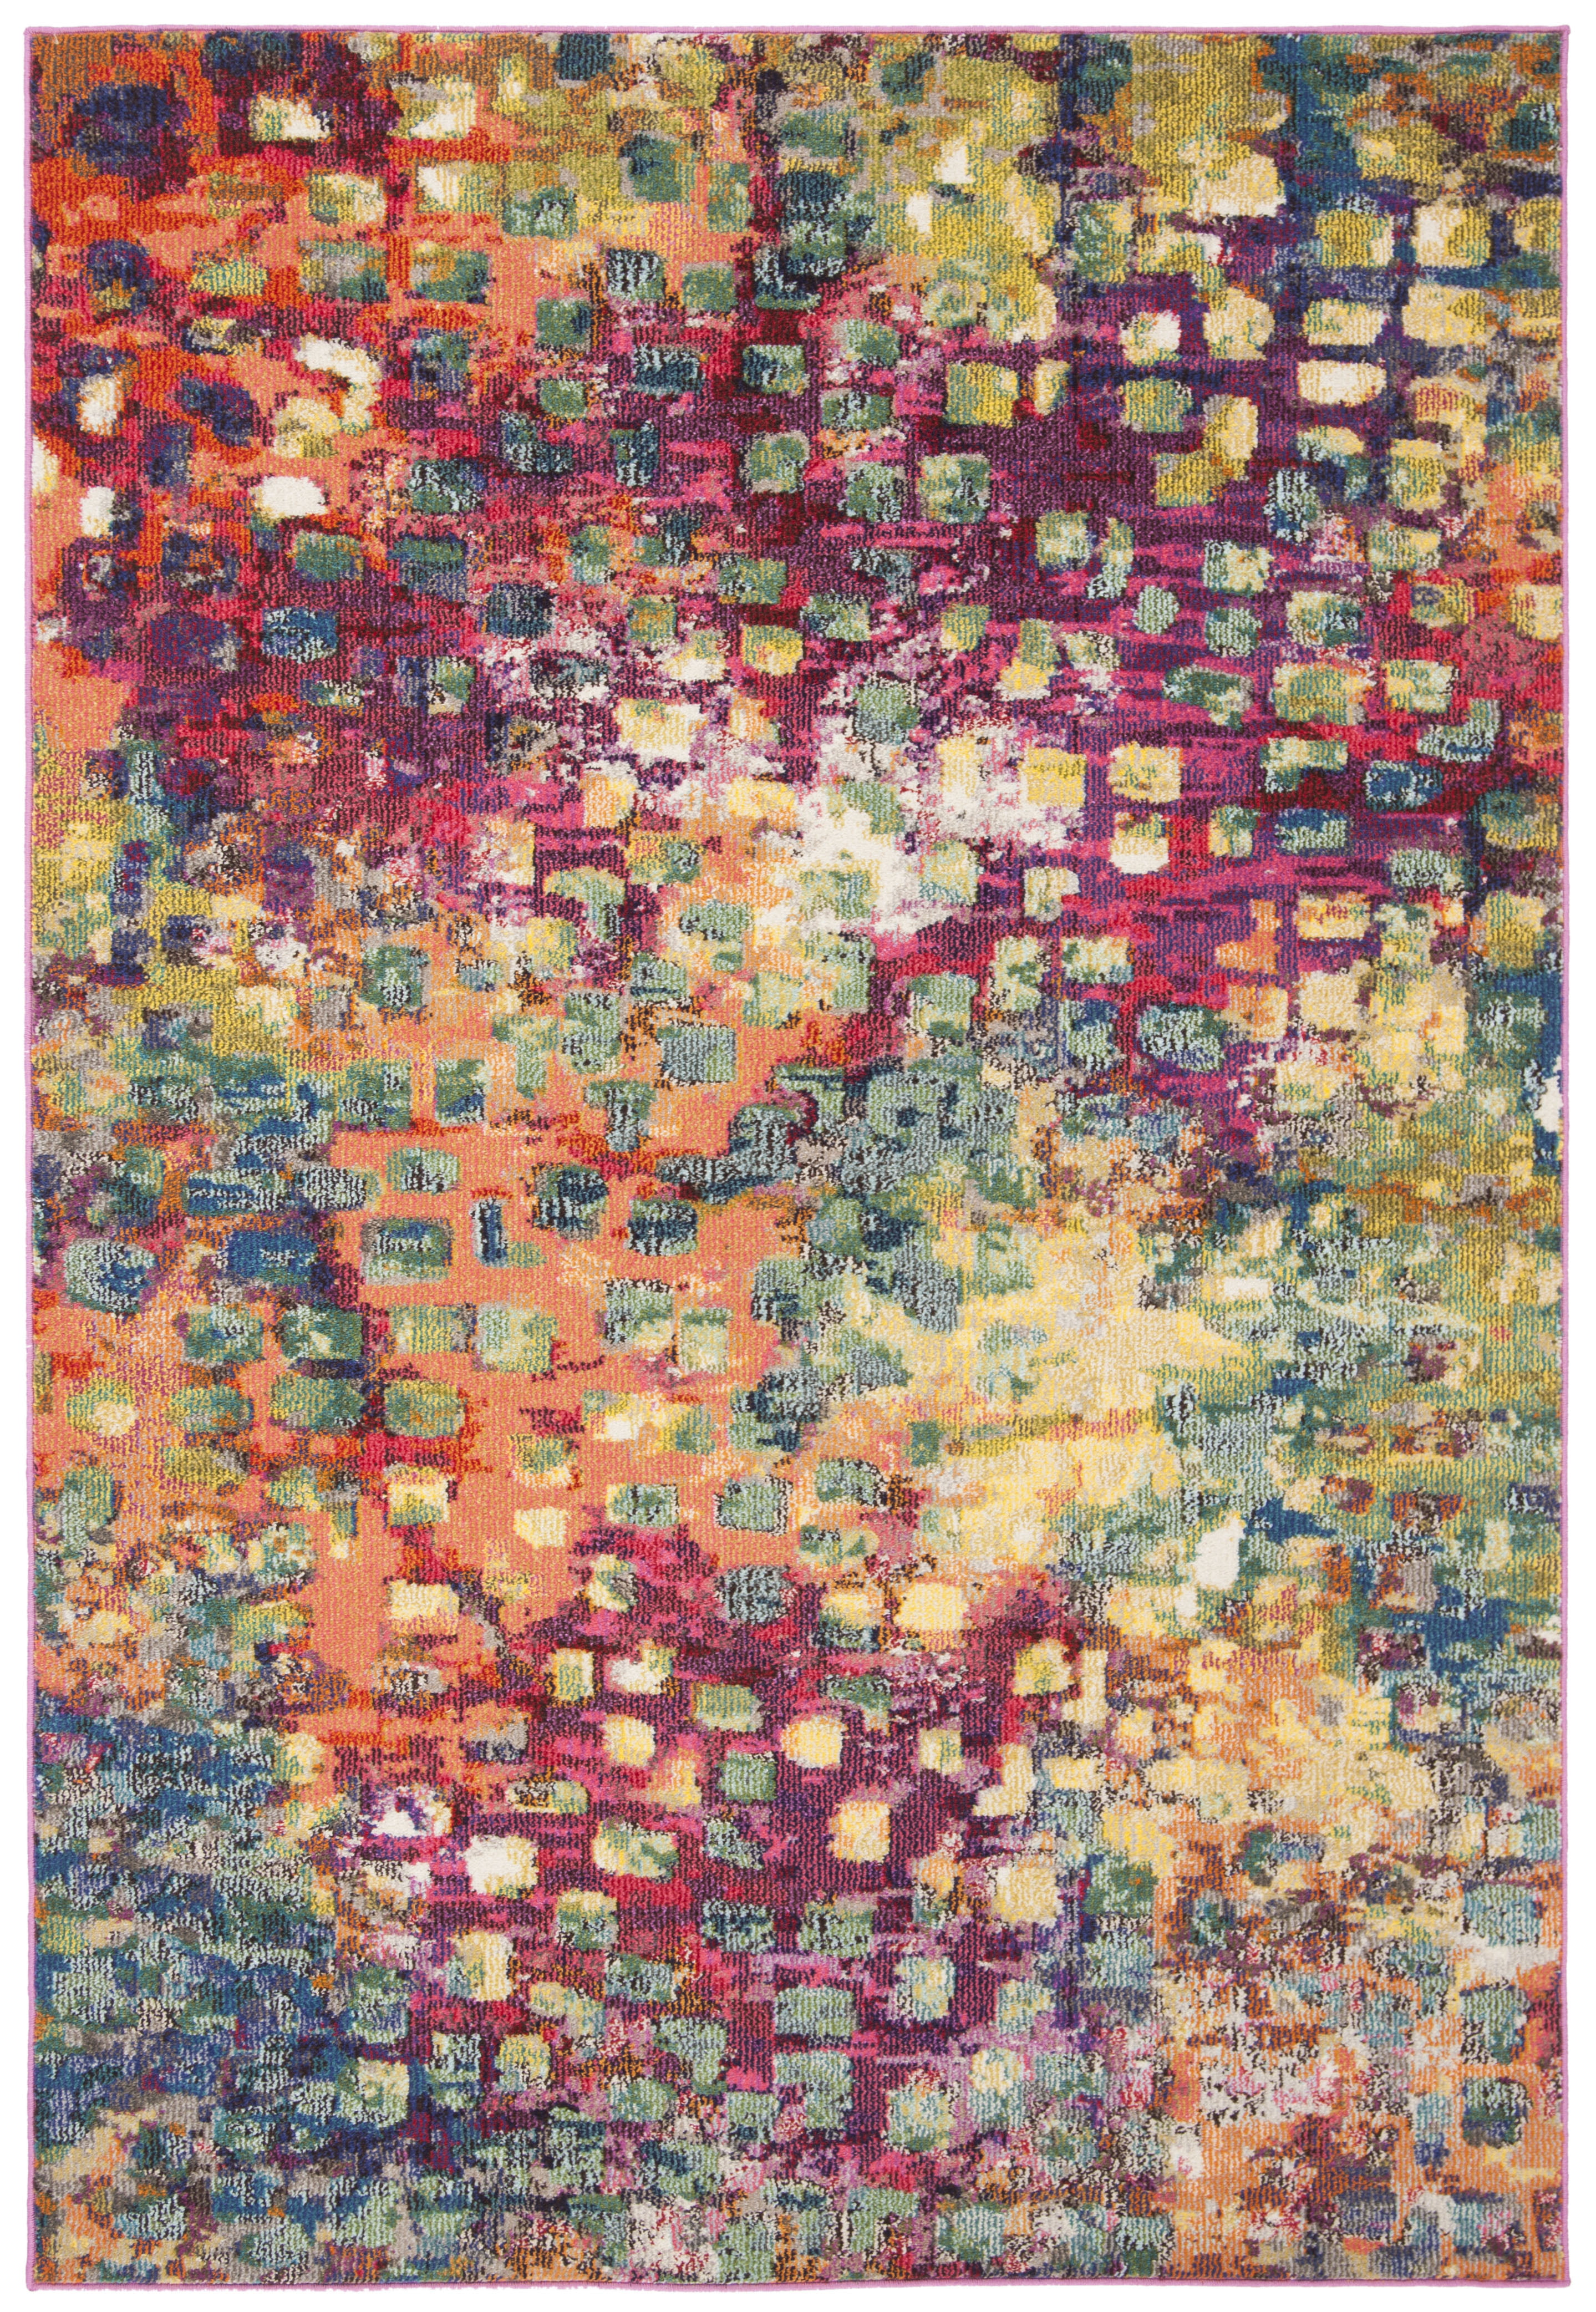 SAFAVIEH Madison Candelario Abstract Polka Dots Area Rug, Fuchsia/Gold, 5'3" x 7'6" - image 1 of 8